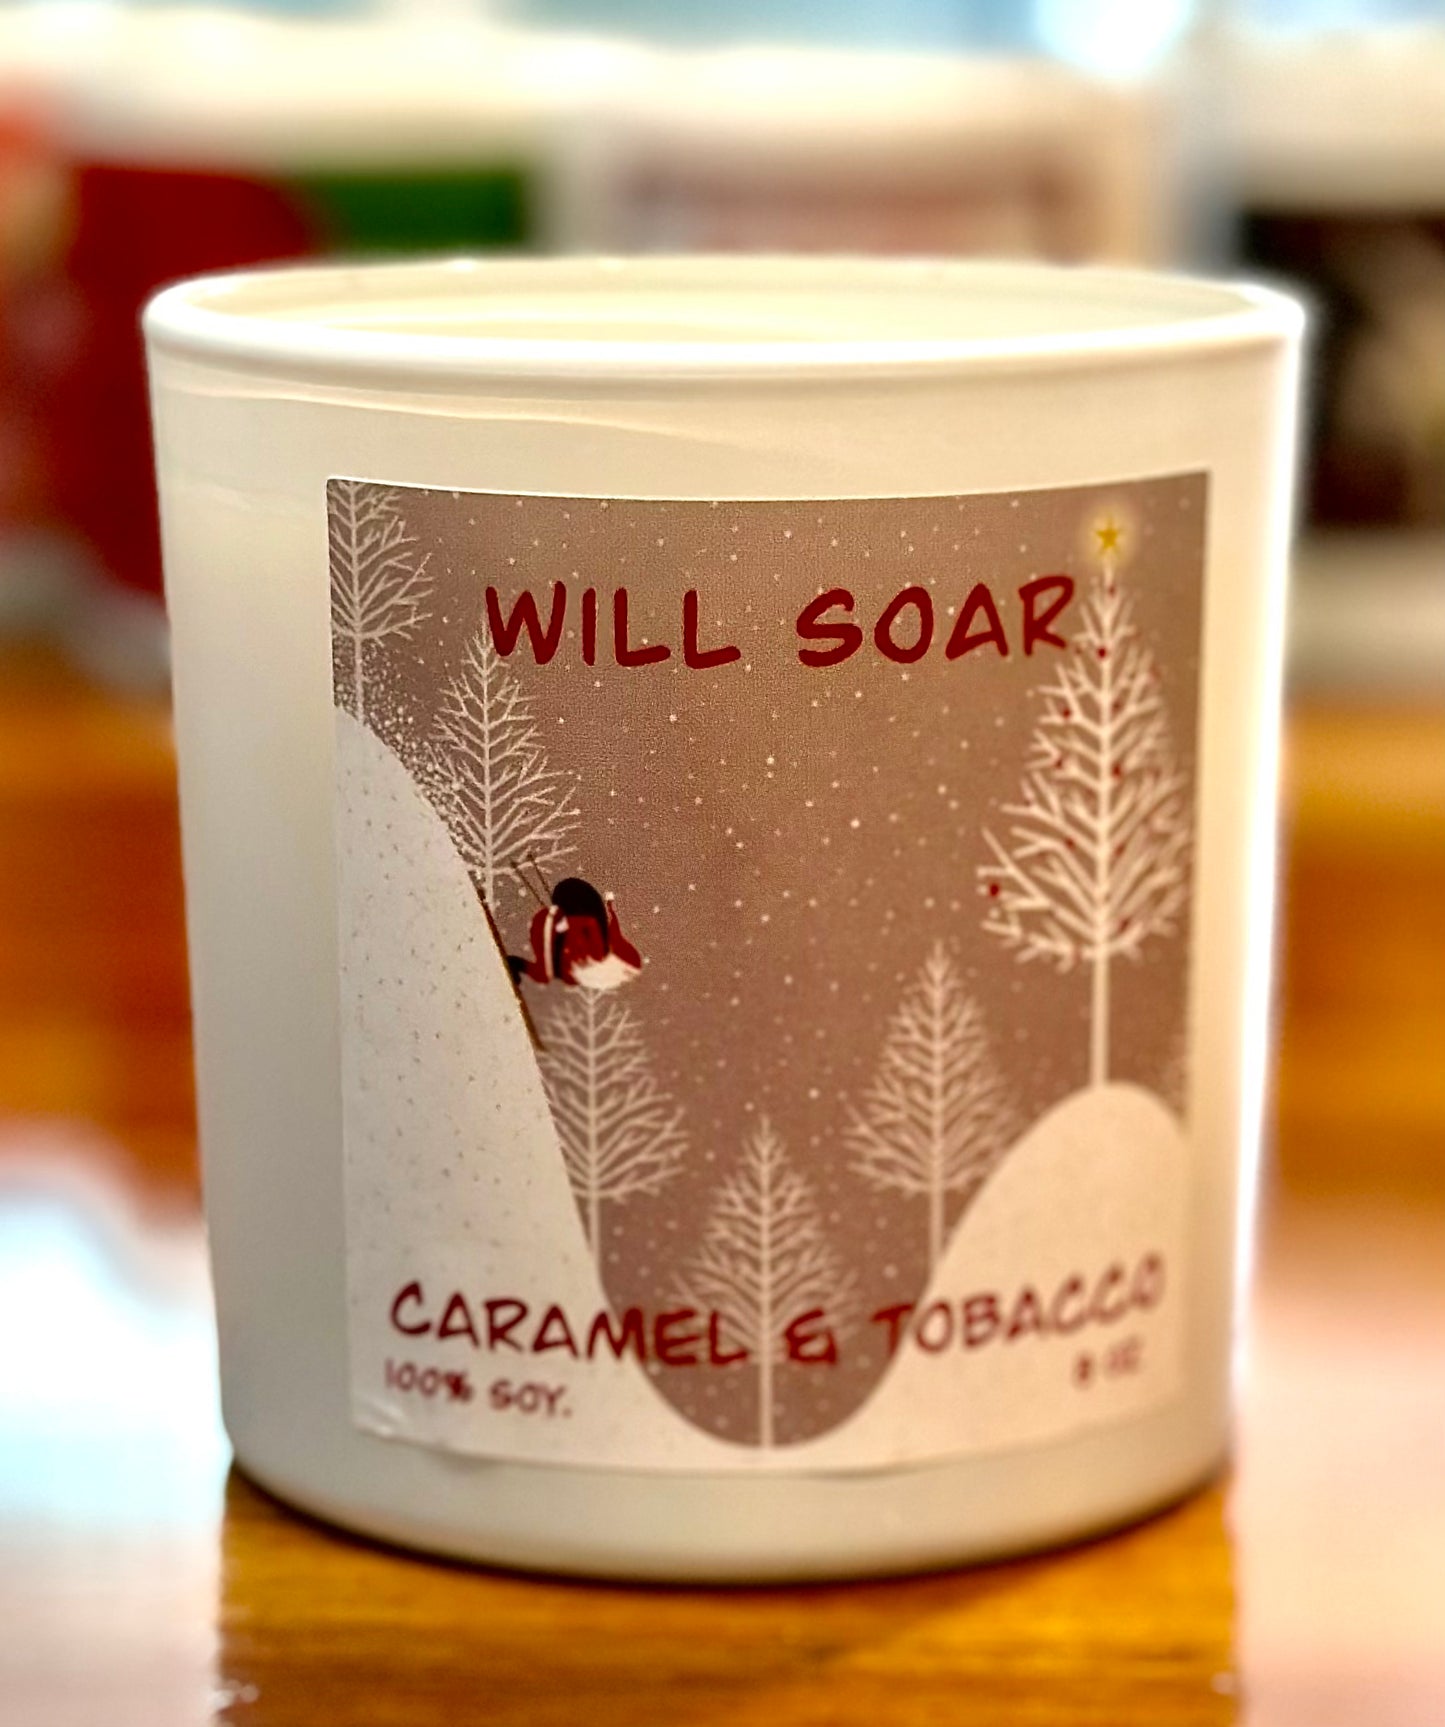 WILL SOAR: Caramel & Tobacco